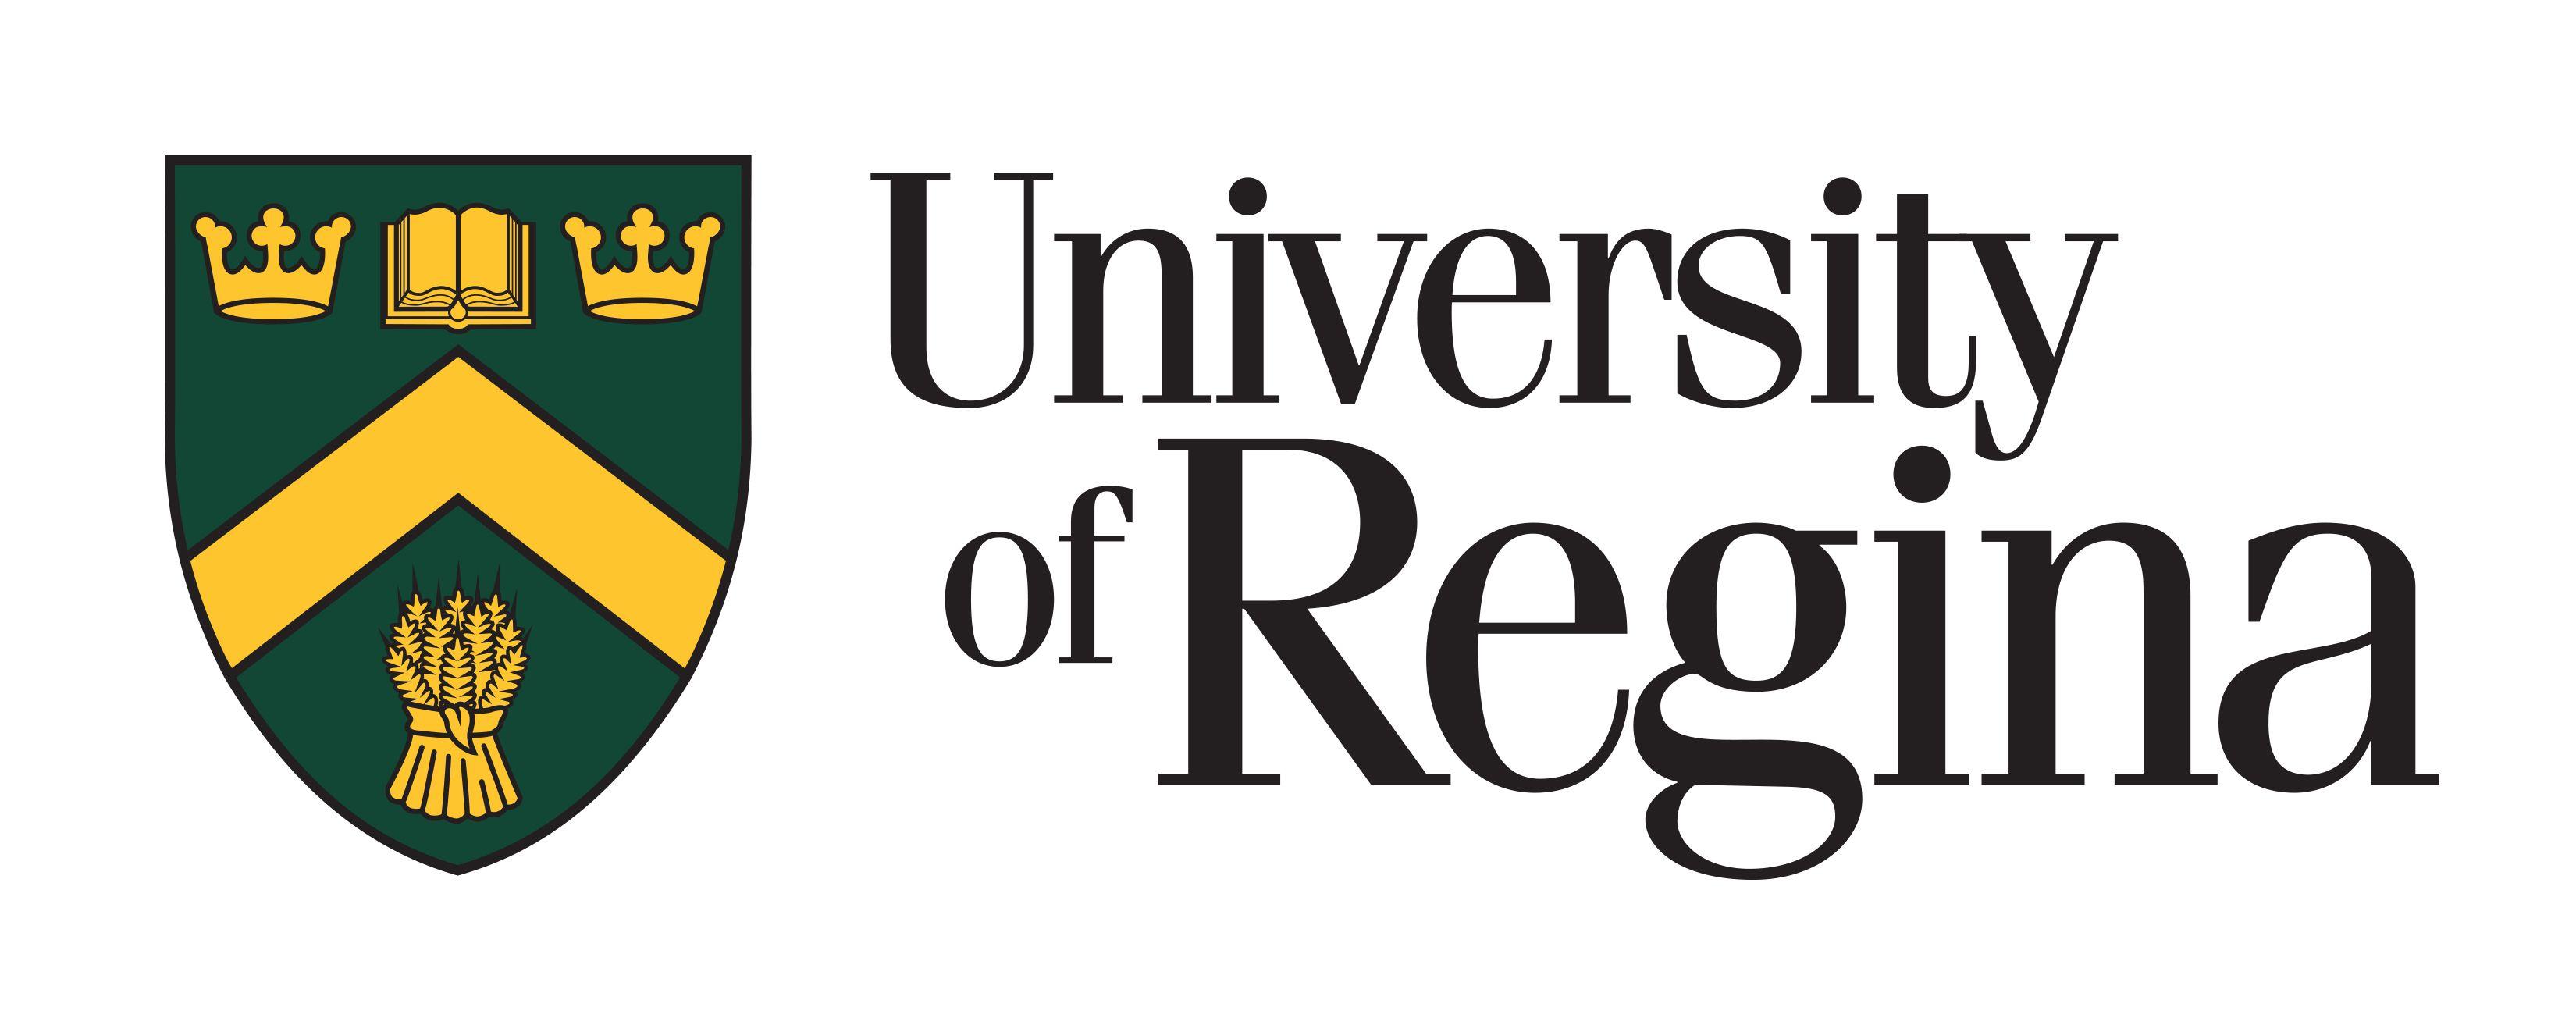 Ur Logo - Primary Logo | Communications and Marketing, University of Regina